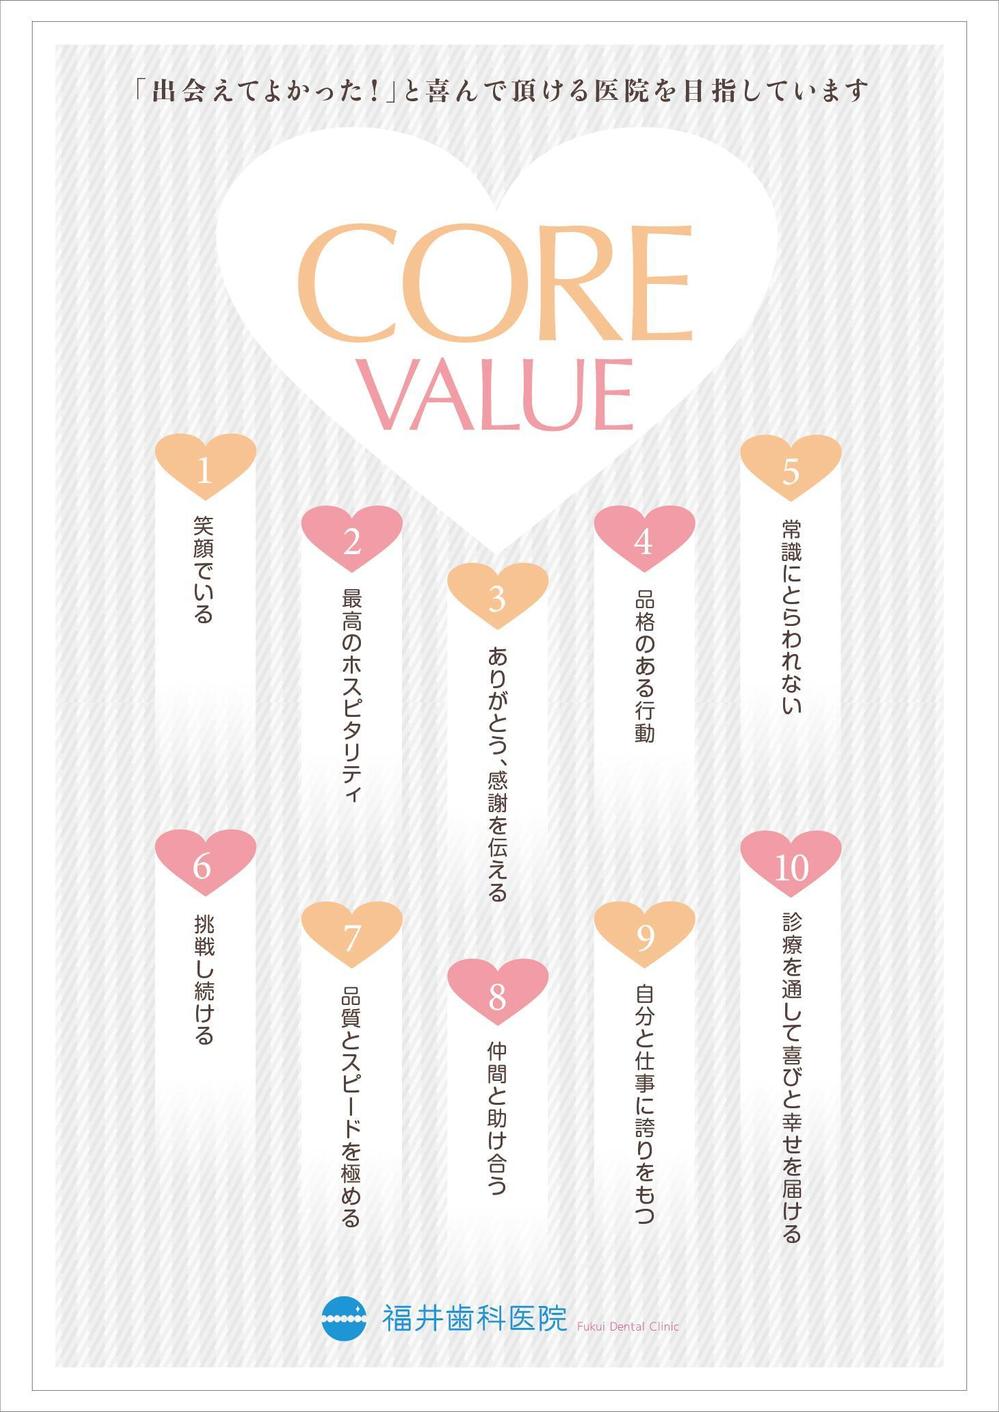 B2_core value2.jpg